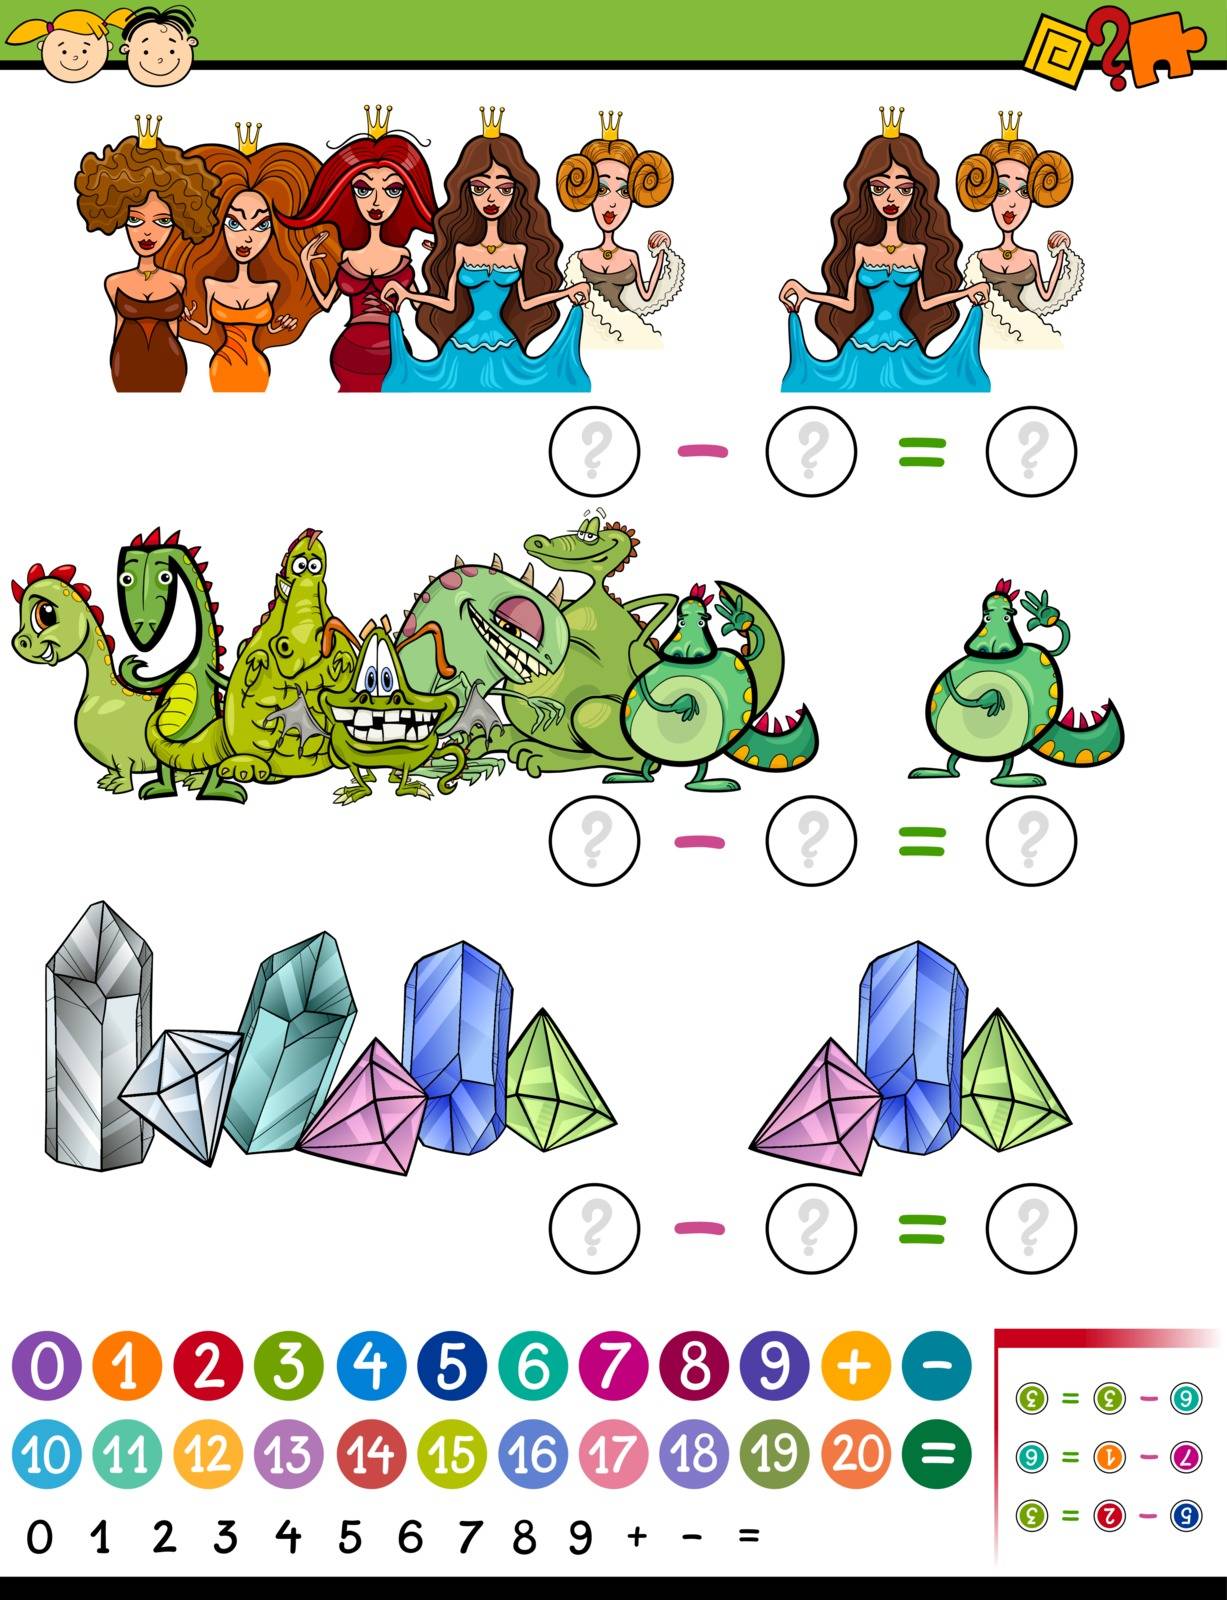 Cartoon Illustration of Education Mathematical Calculating Game for Preschool Children